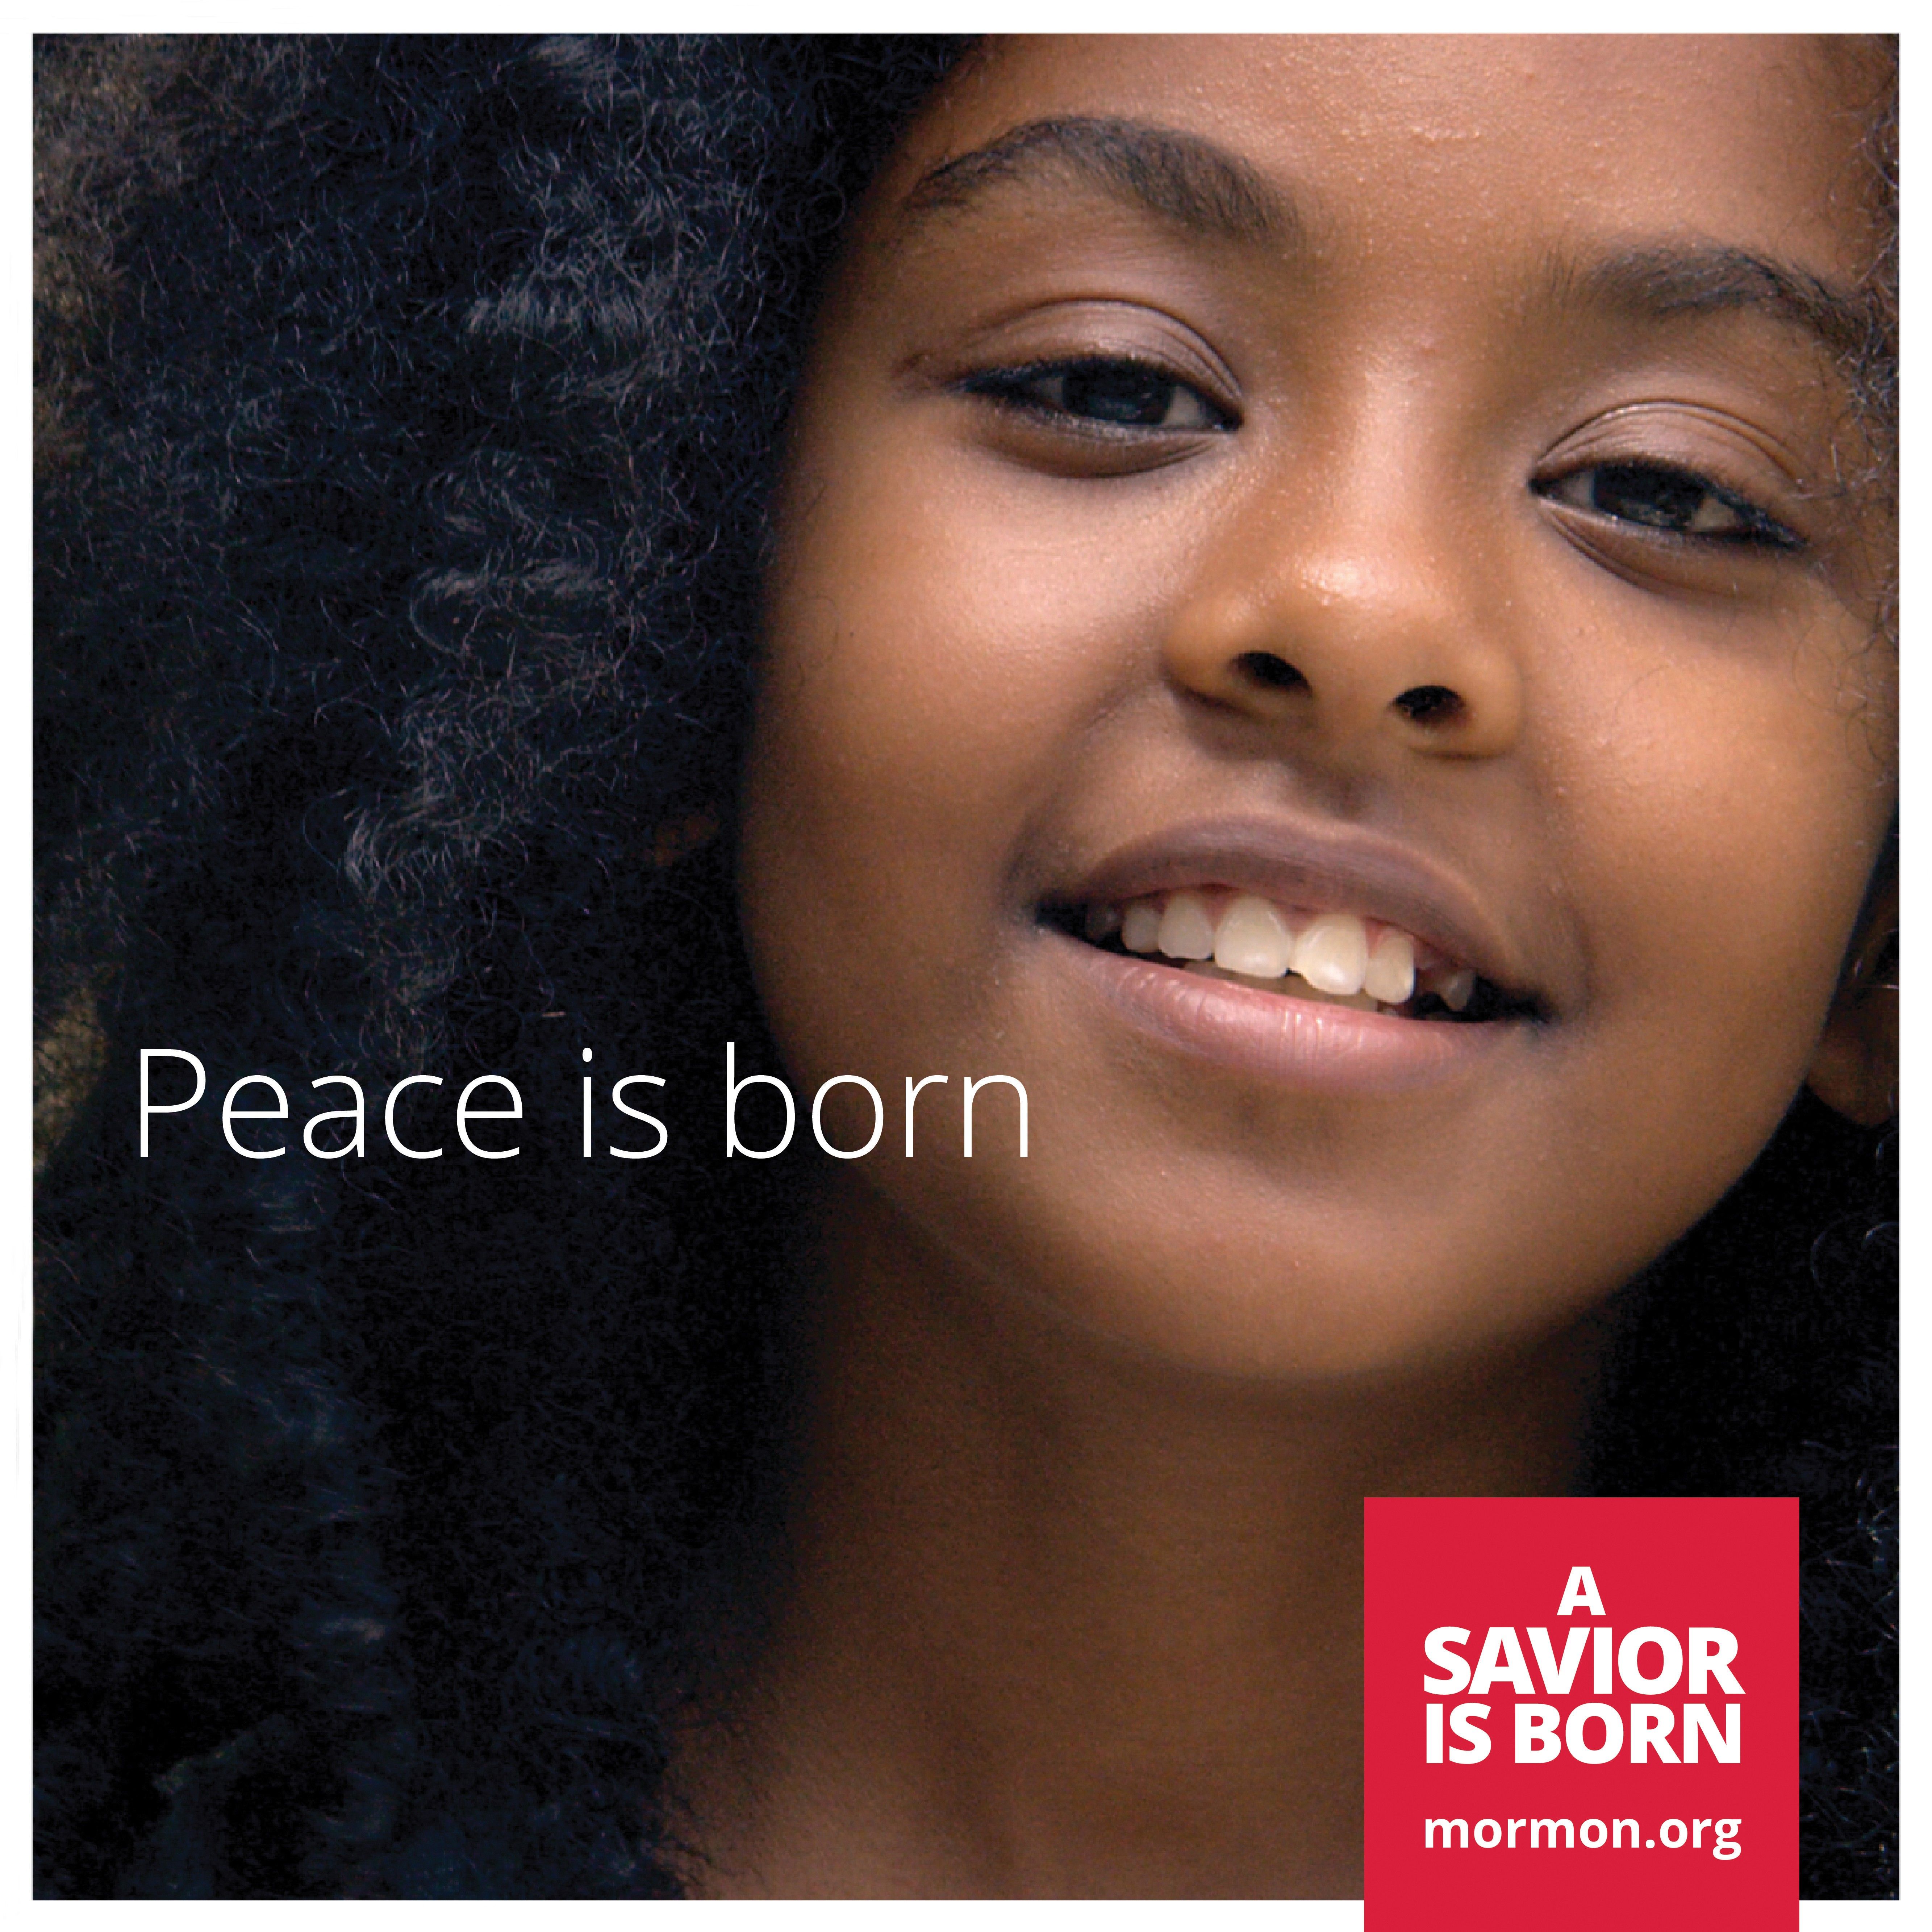 “Peace is born.” —mormon.org, “A Savior Is Born”